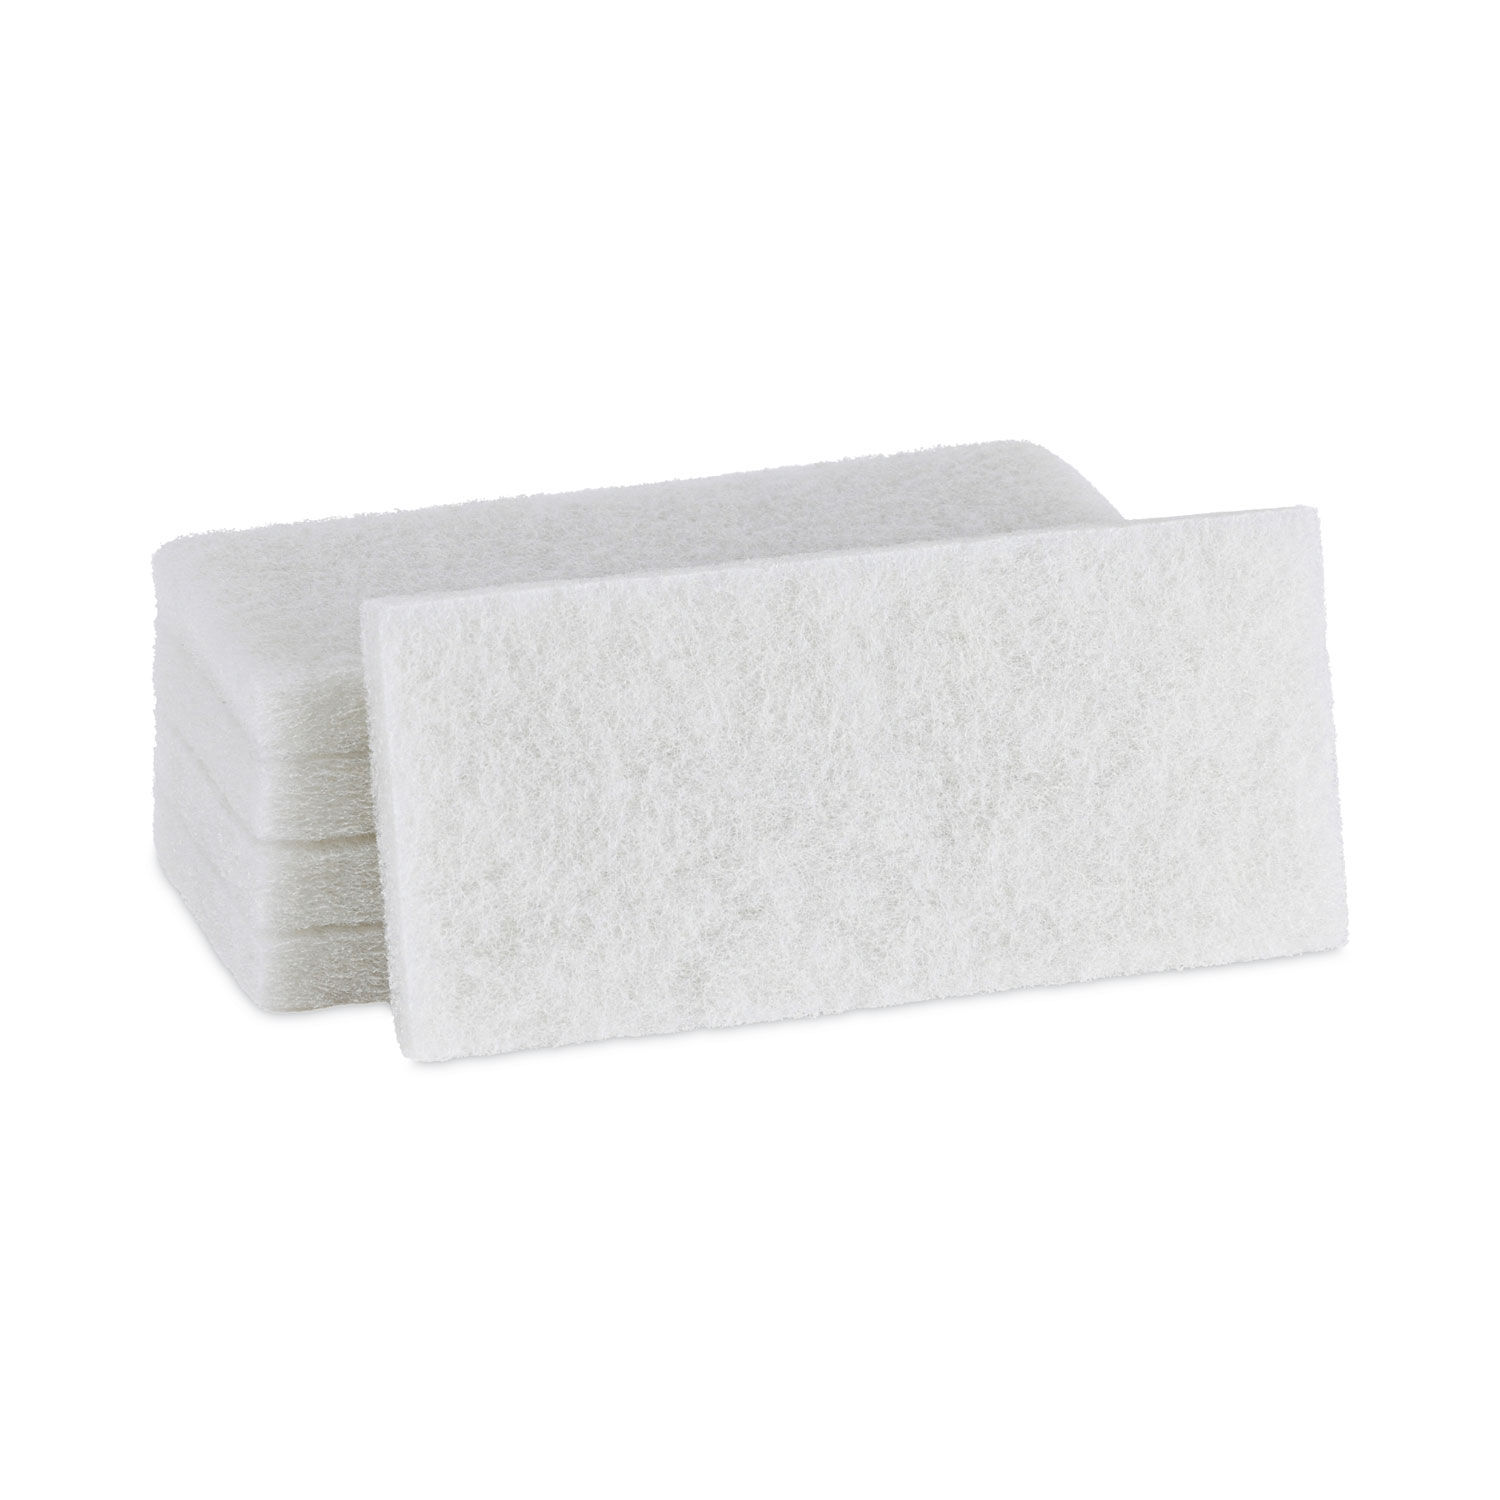 Light Duty Scour Pad 4.63  x 10, White, 20/Carton